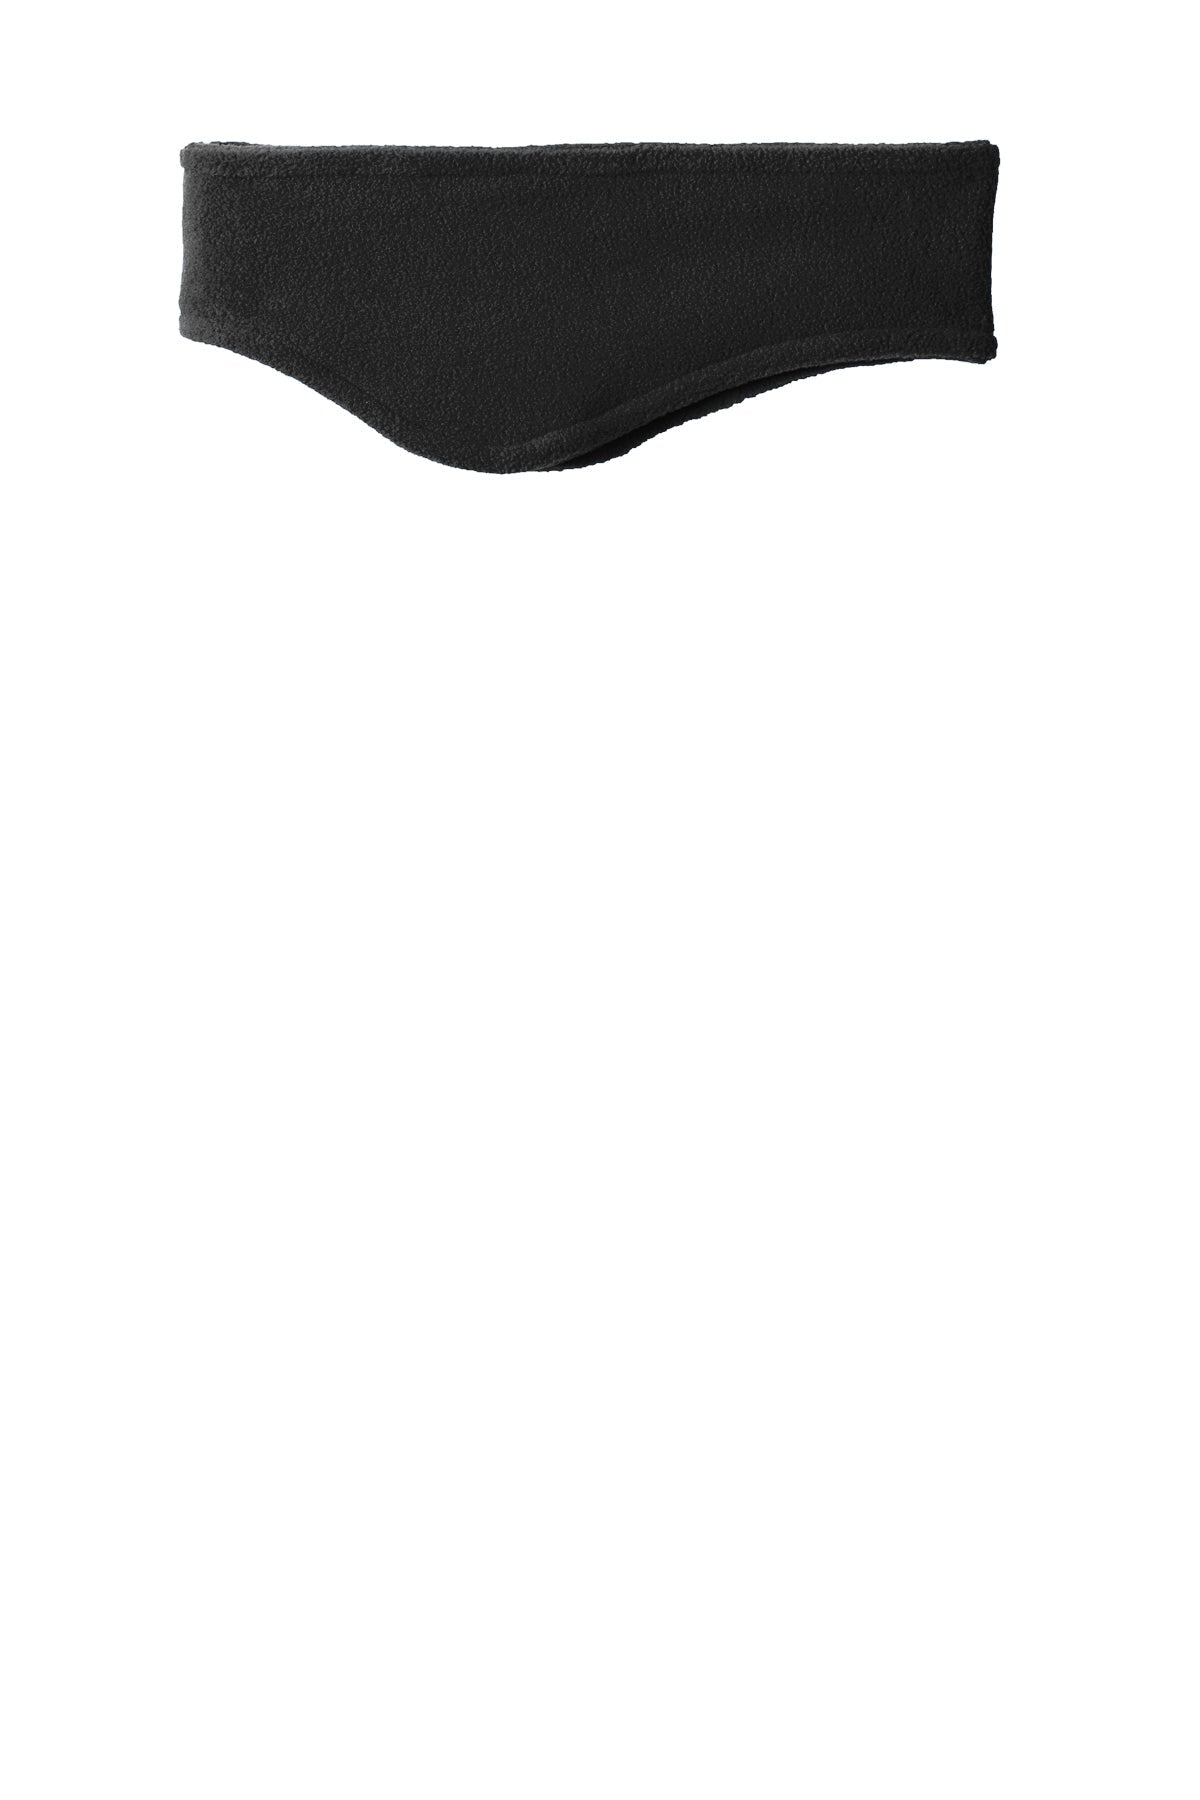 Port Authority R-Tek Stretch Fleece Customized Headbands, Black